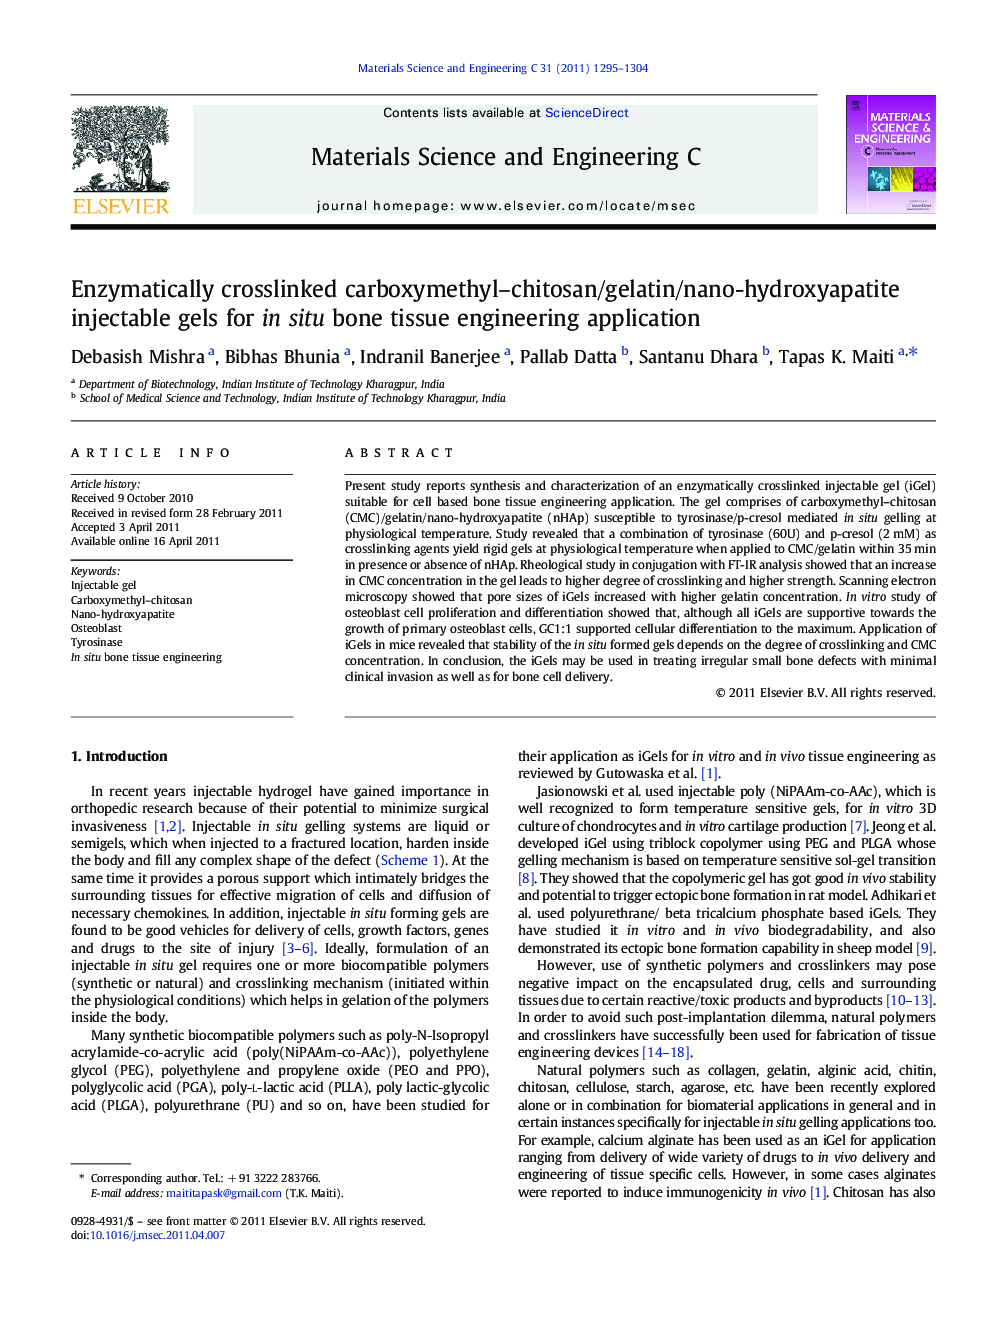 Enzymatically crosslinked carboxymethyl–chitosan/gelatin/nano-hydroxyapatite injectable gels for in situ bone tissue engineering application